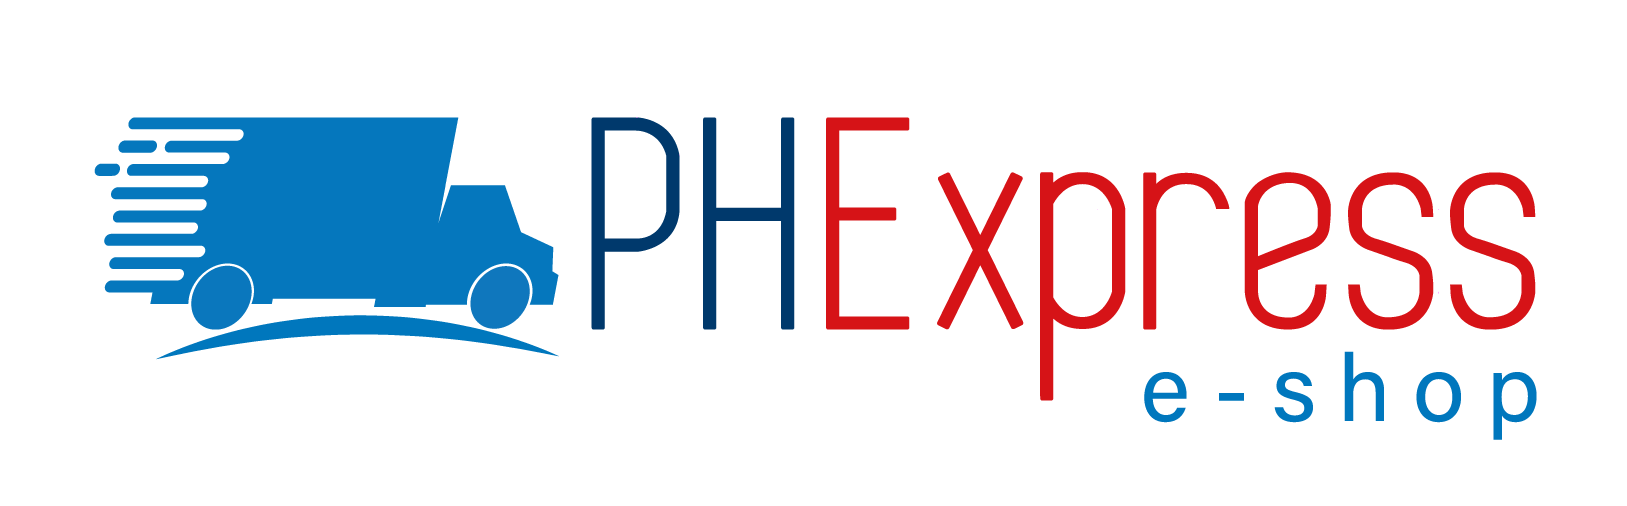 phexpress